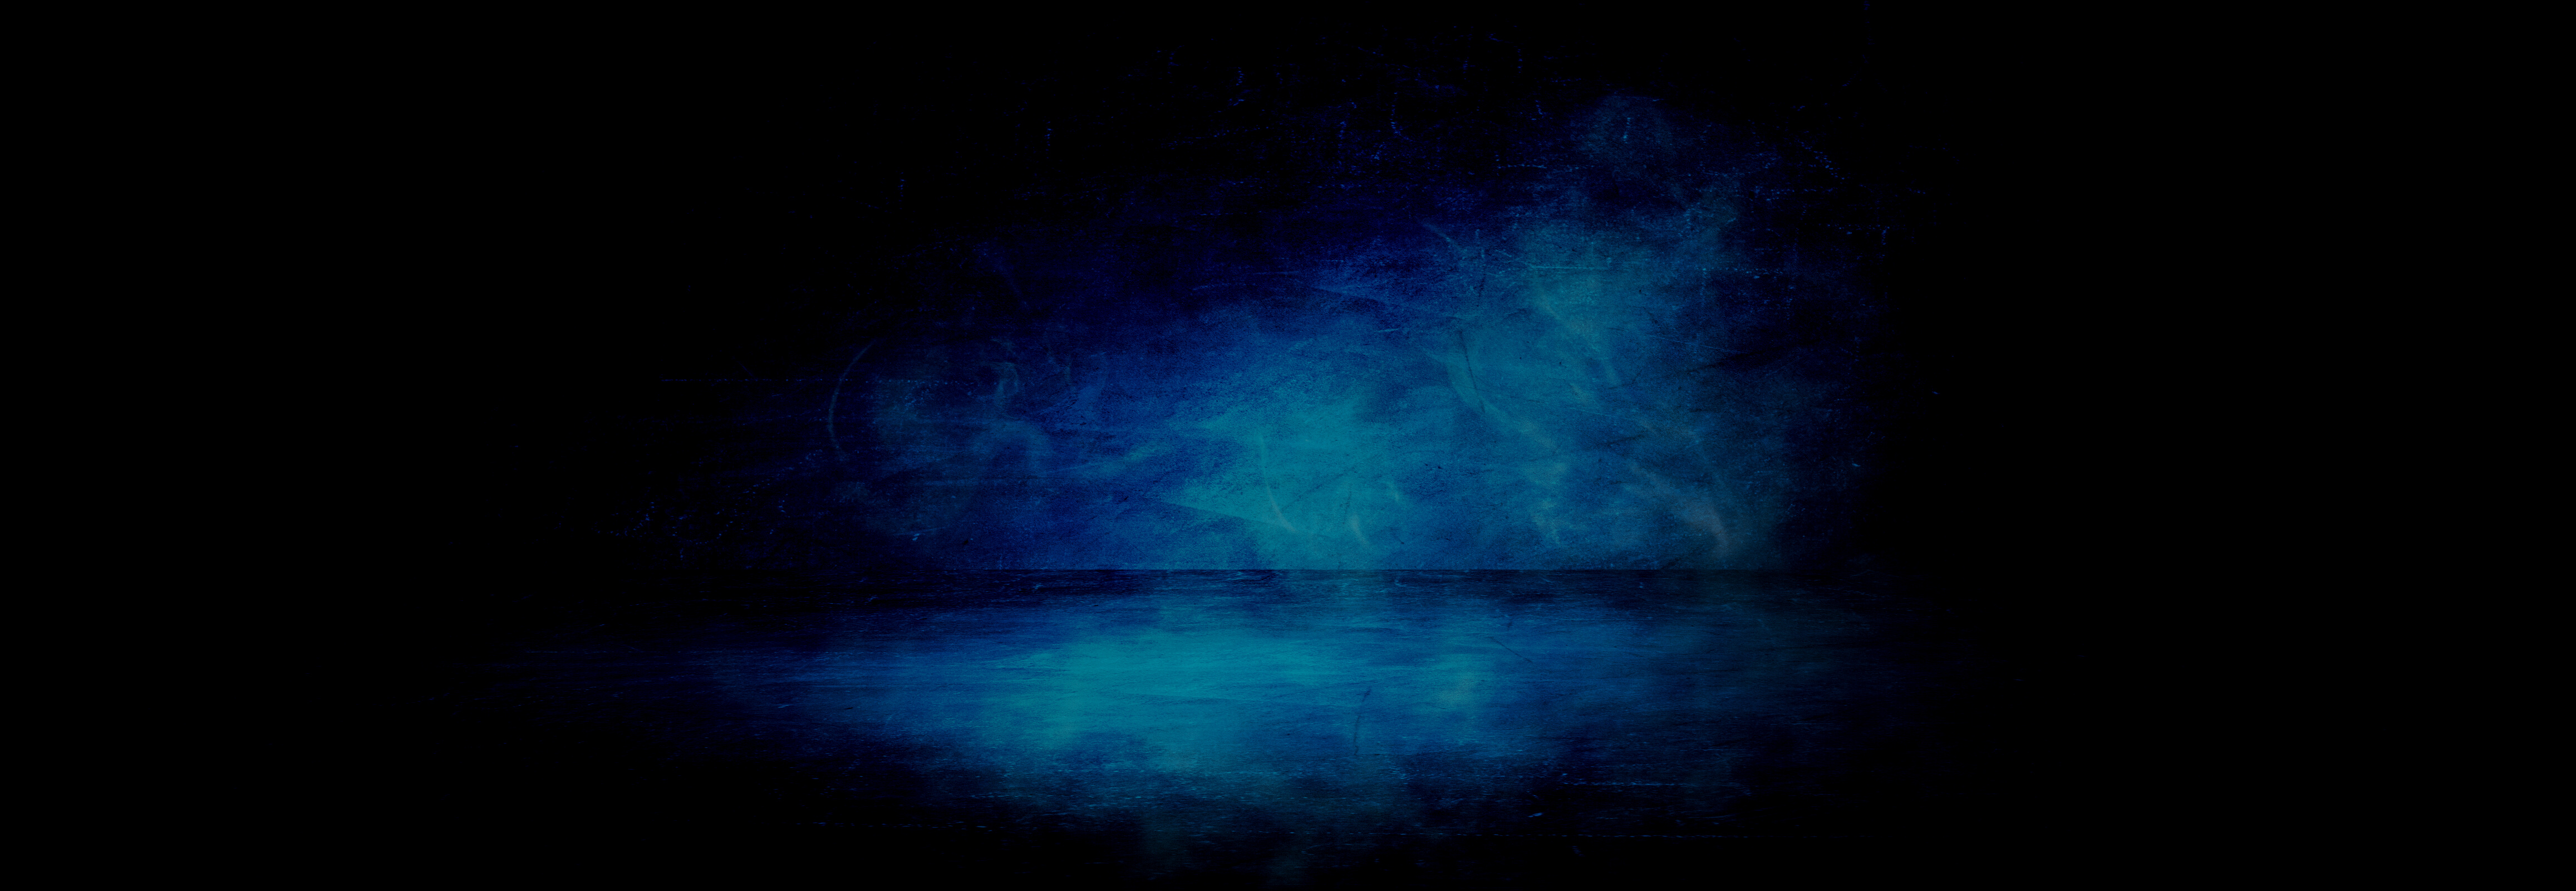 Dark Blue Cement with Smoke Wall Studio Background